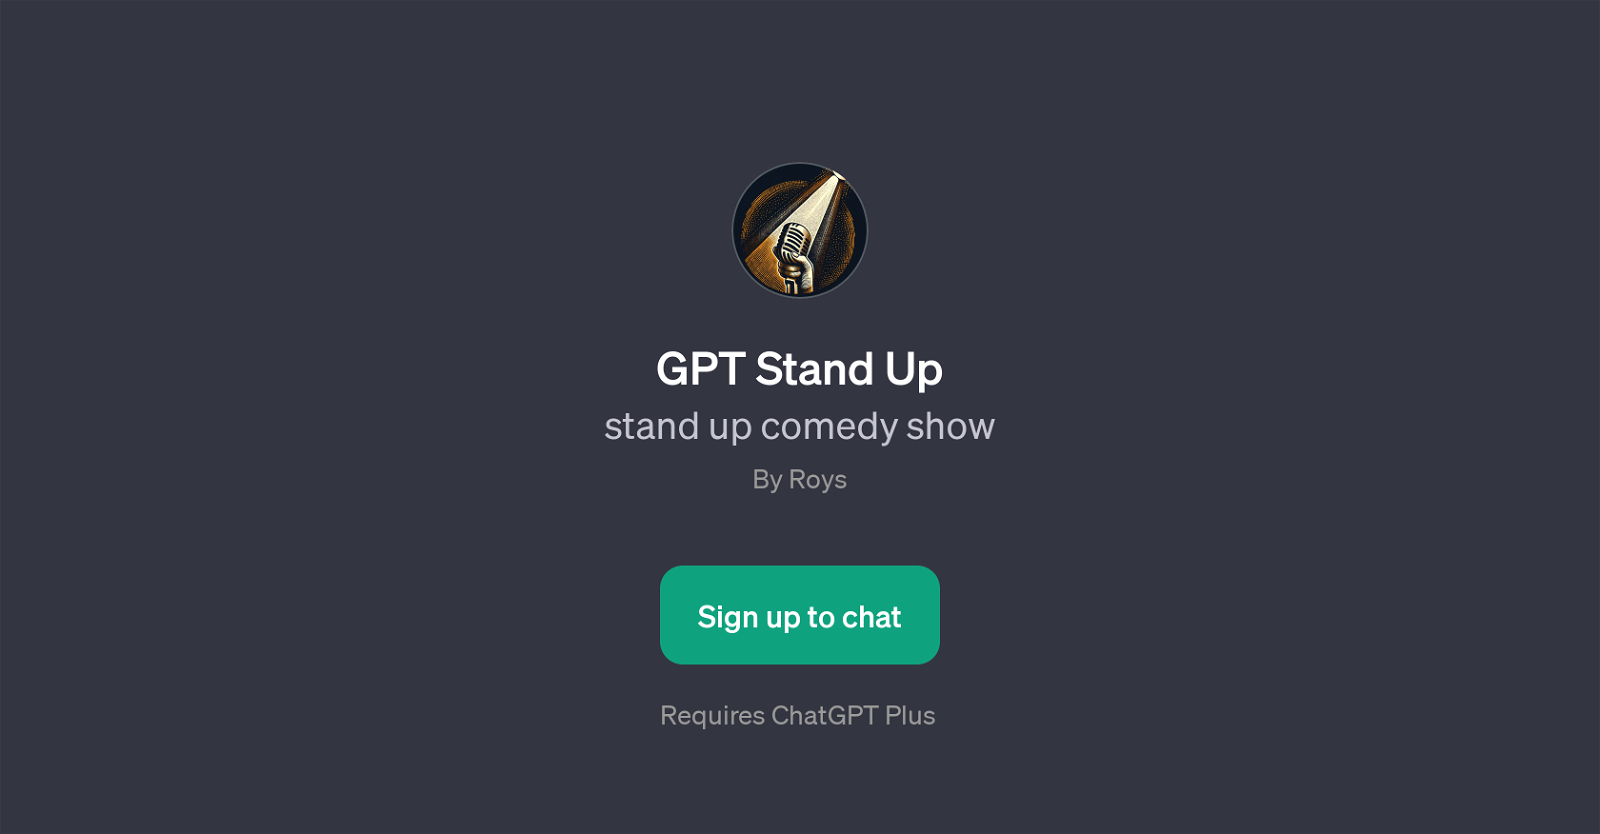 GPT Stand Up website